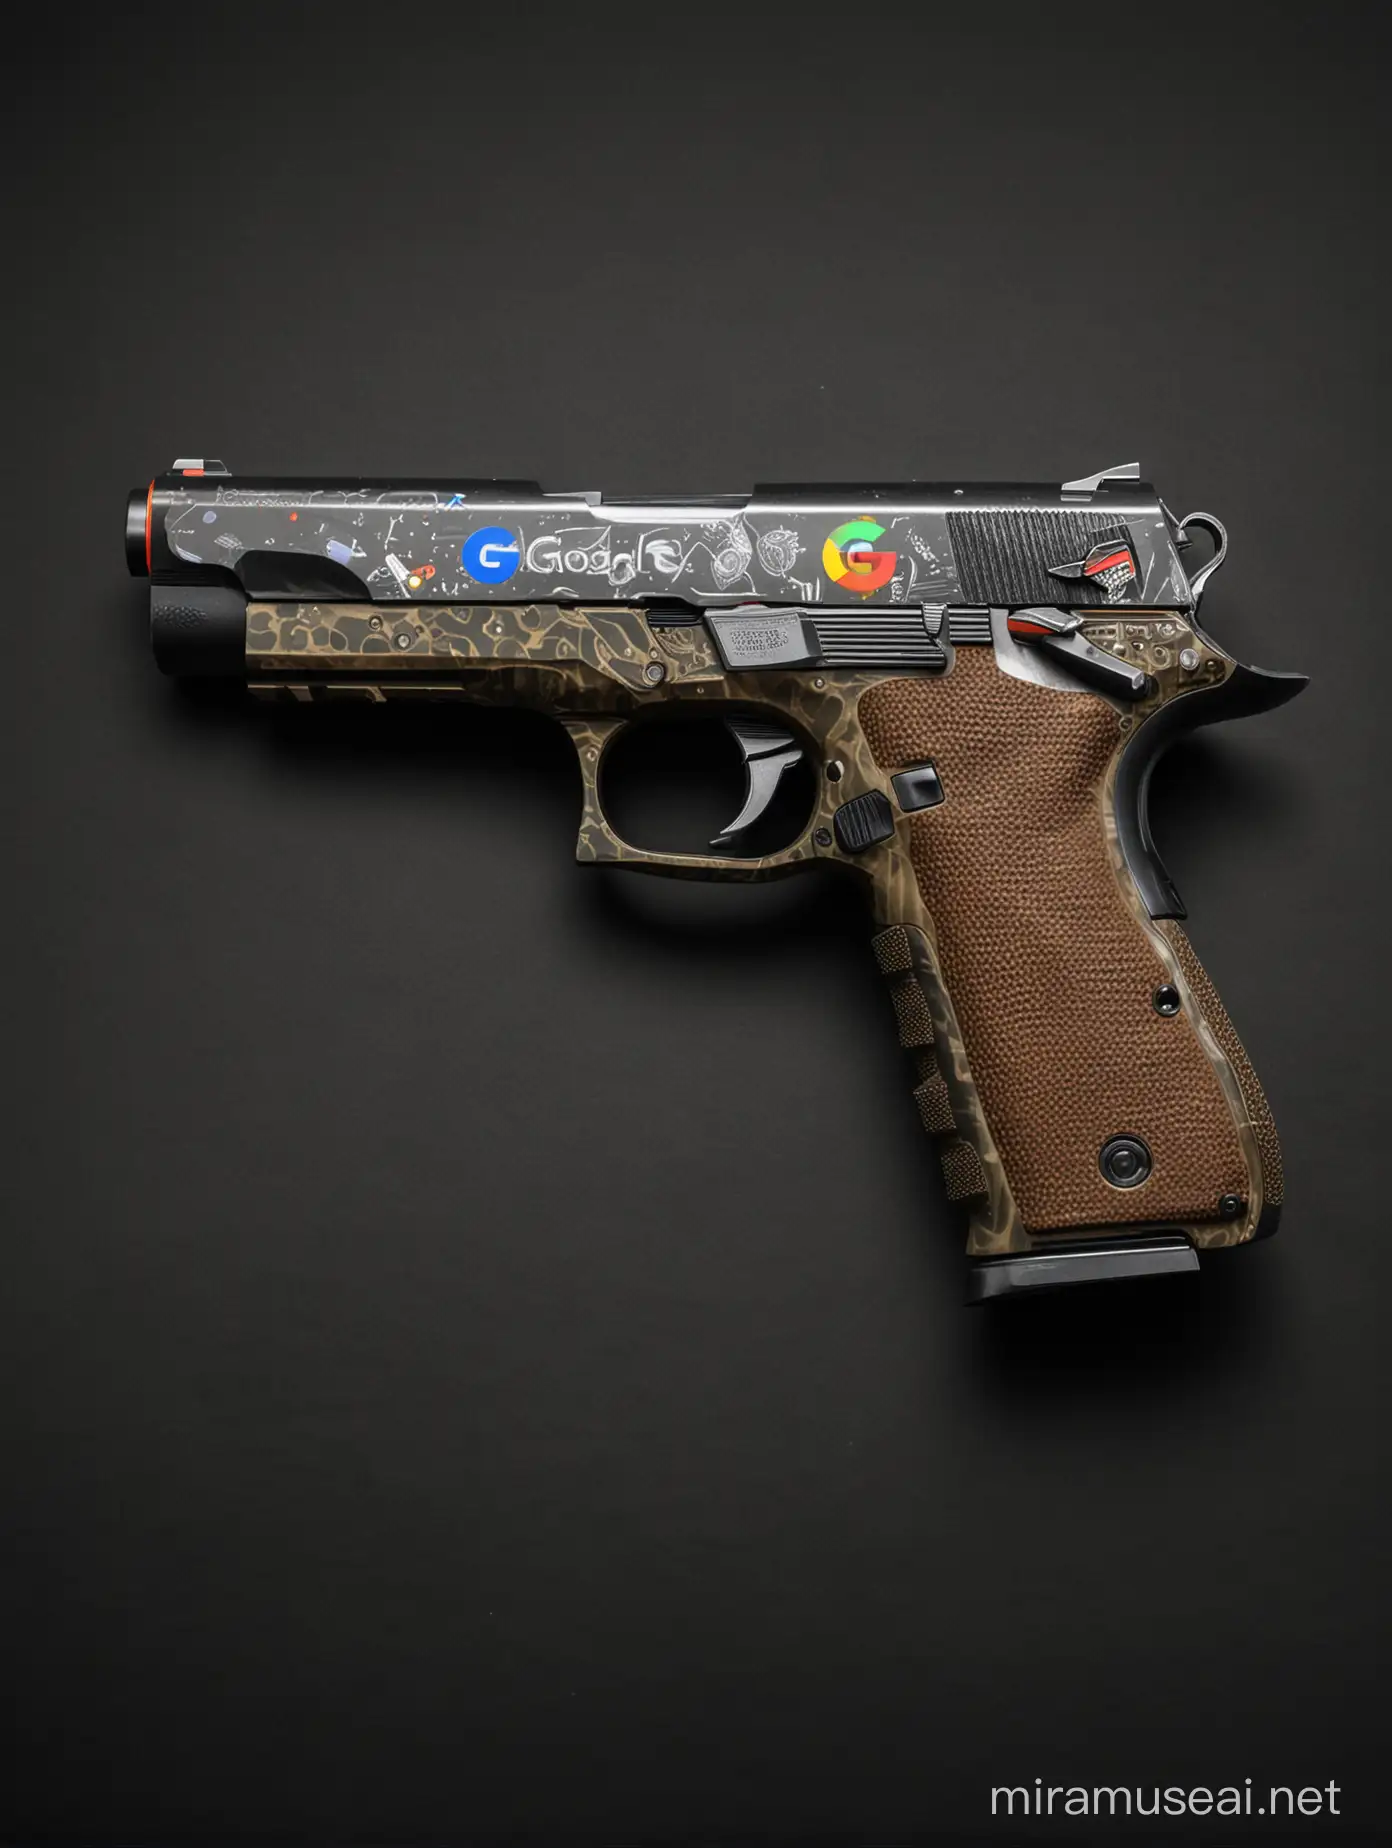 Colorful Modern Pistol with Google Logo on Black Background